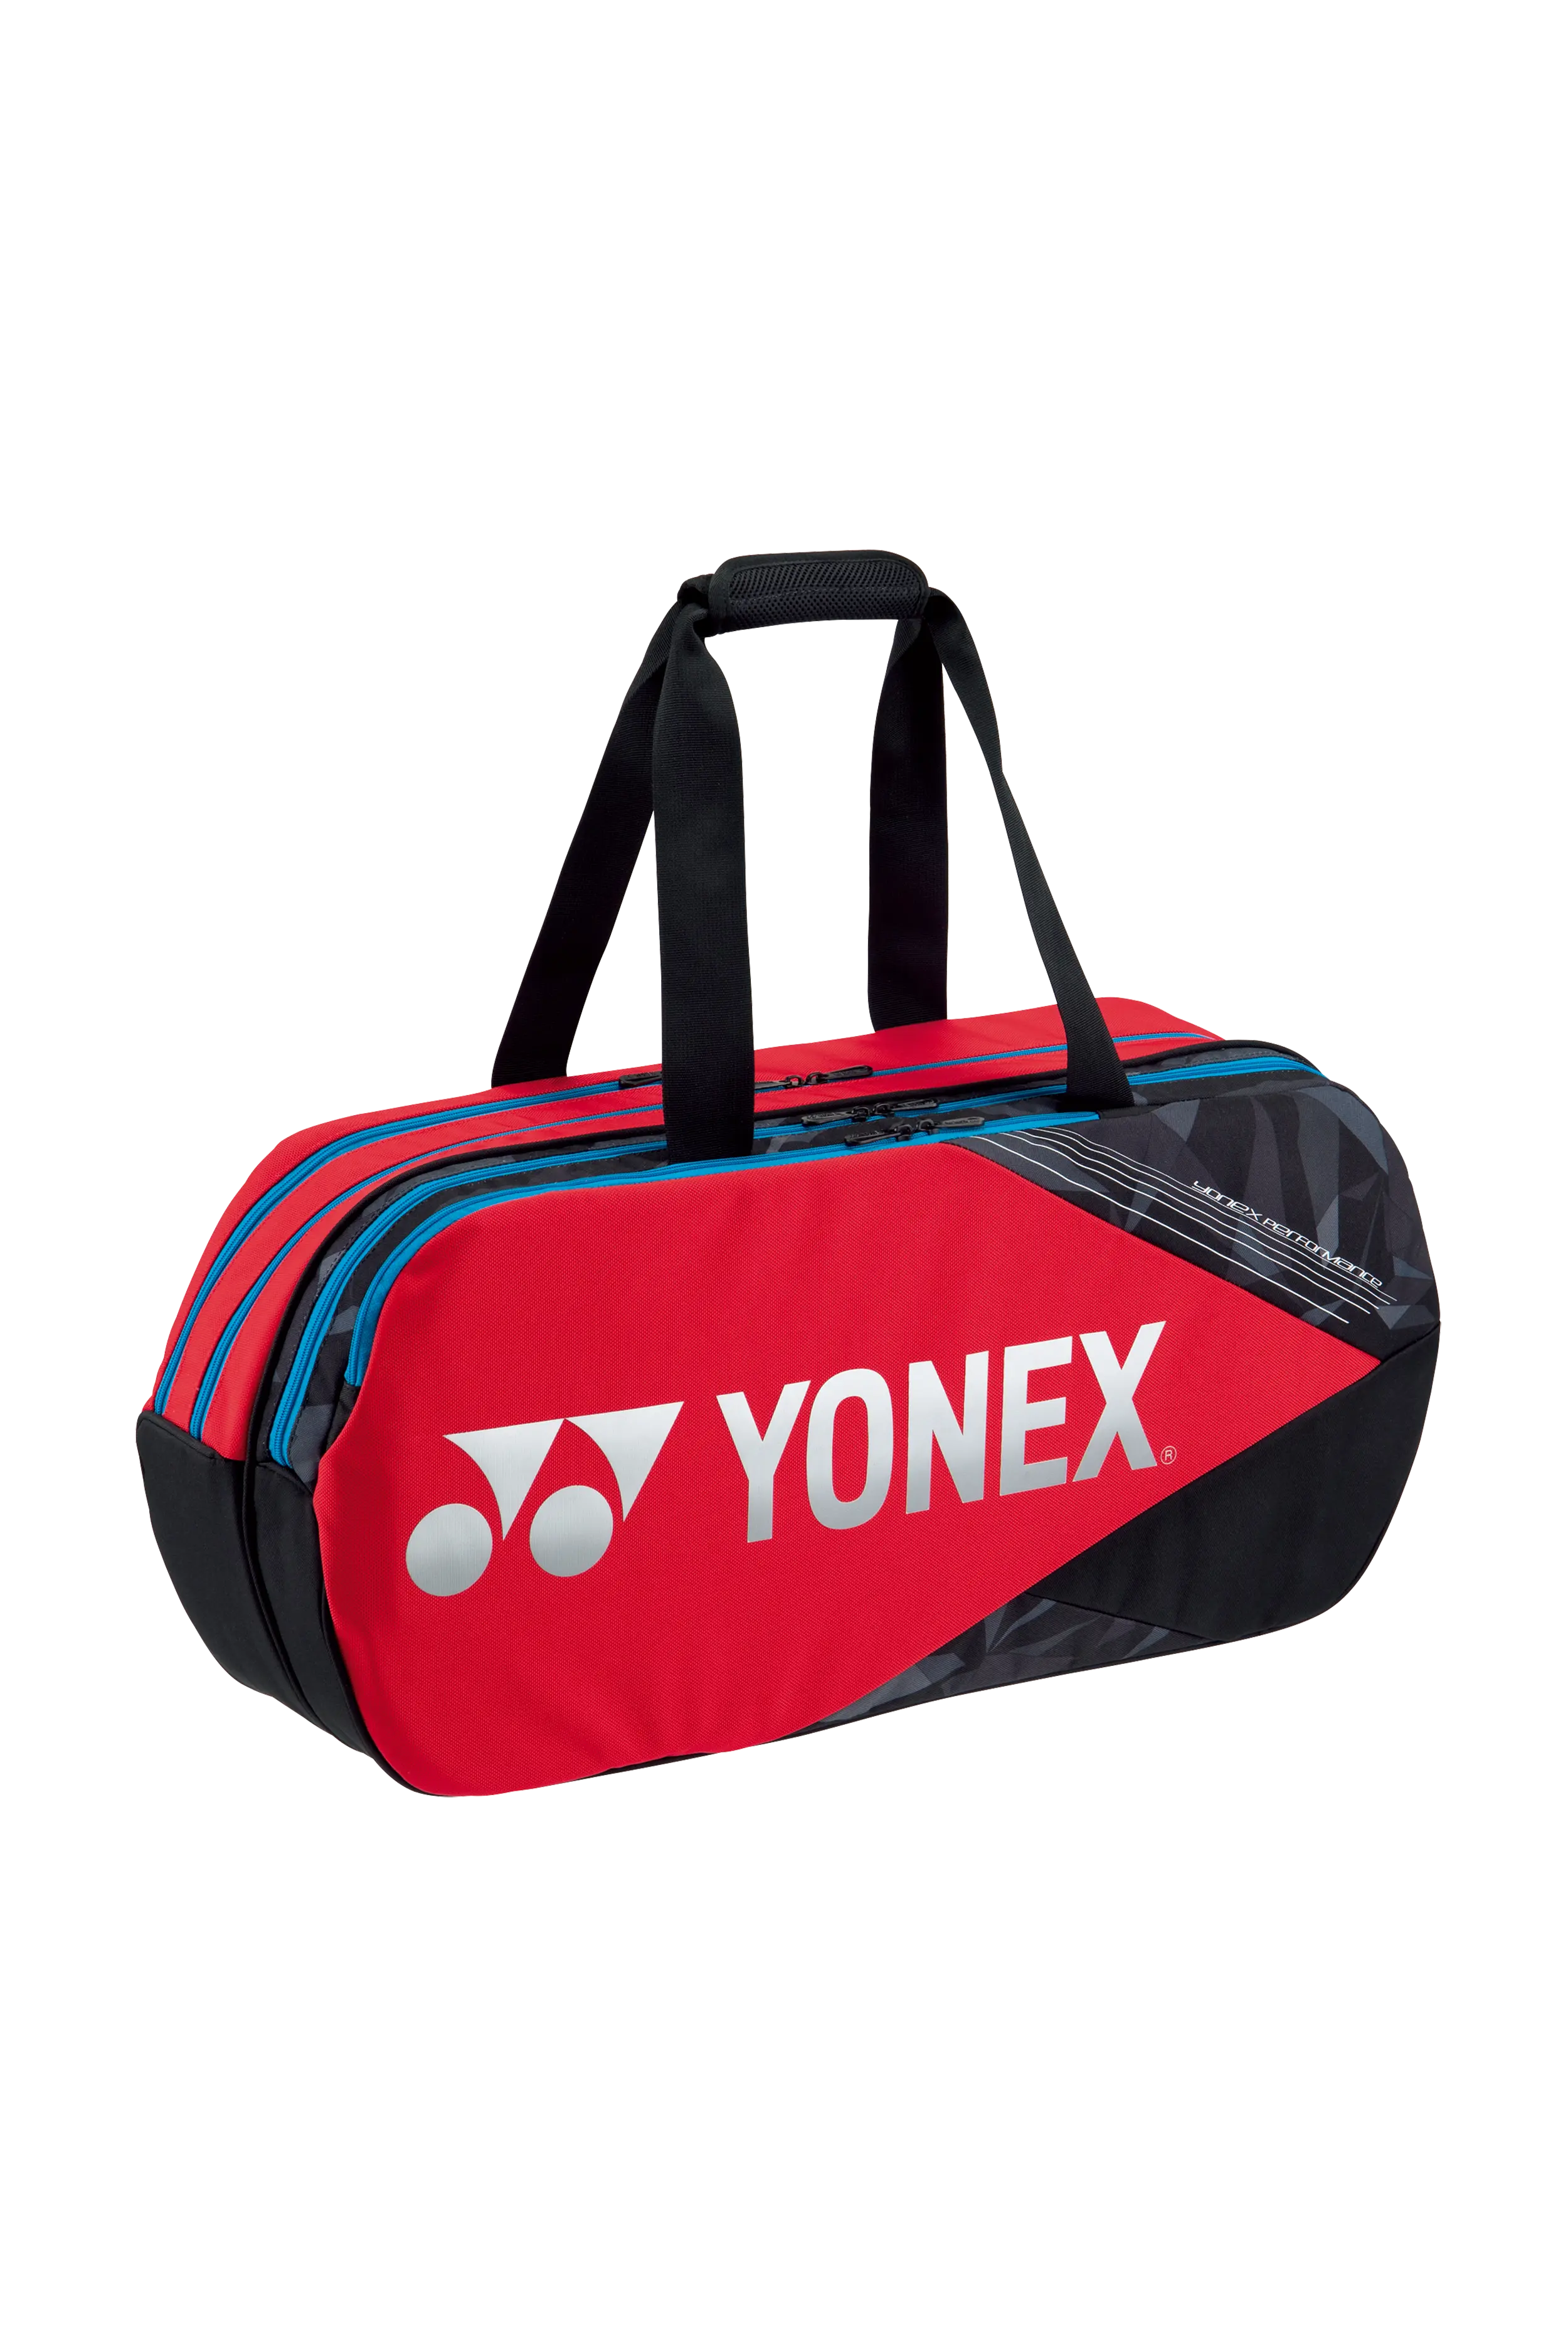 Yonex BA92231 (Tango Red) 6pk Pro Tournament Badminton Tennis Racket Bag 